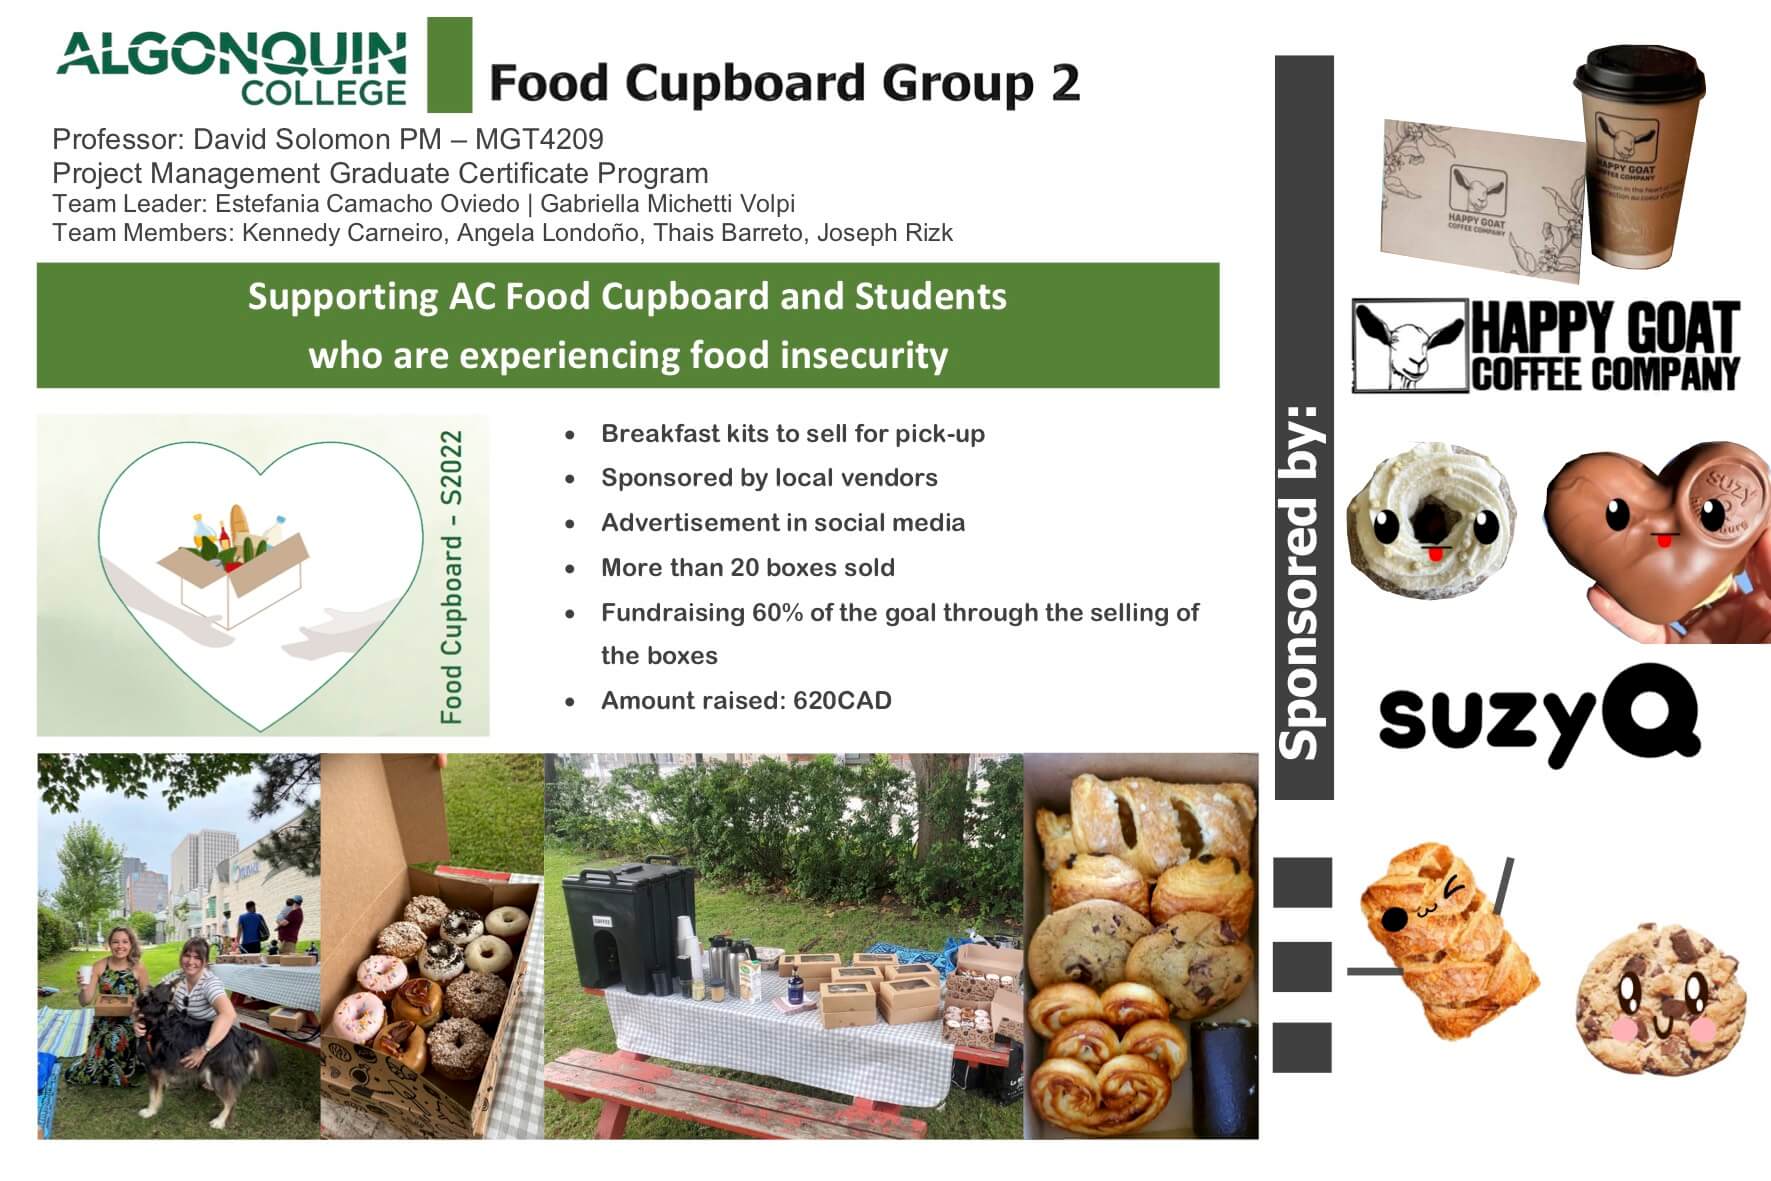 Food Cupboard Fundraising